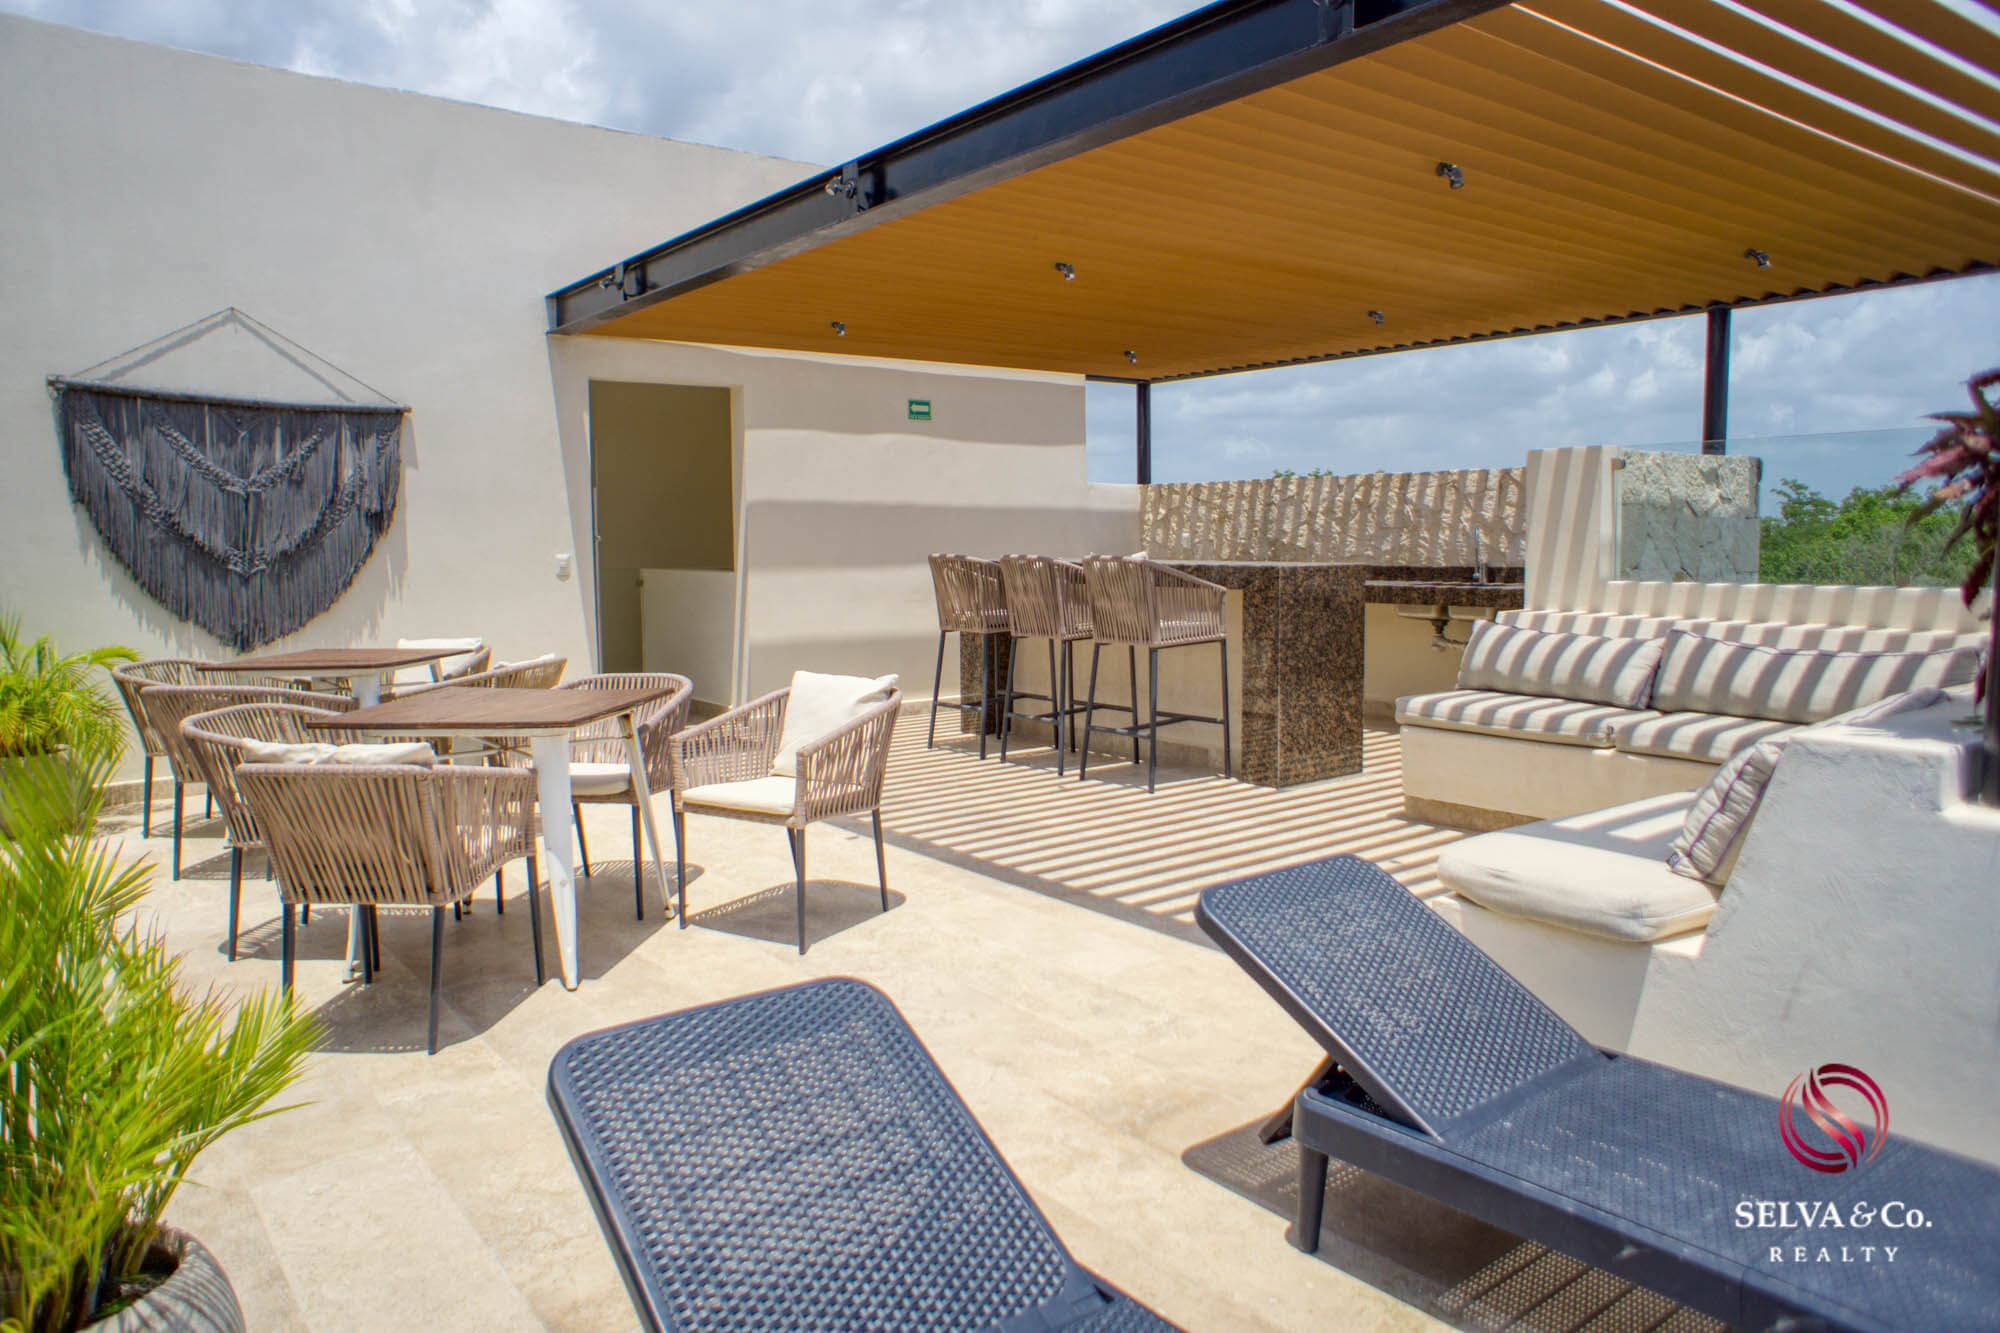 Departamento con terraza amplia de 35 m2, area de yoga, area de asadores, 2 albercas con areas lounge, pre construccion, venta Tulum.